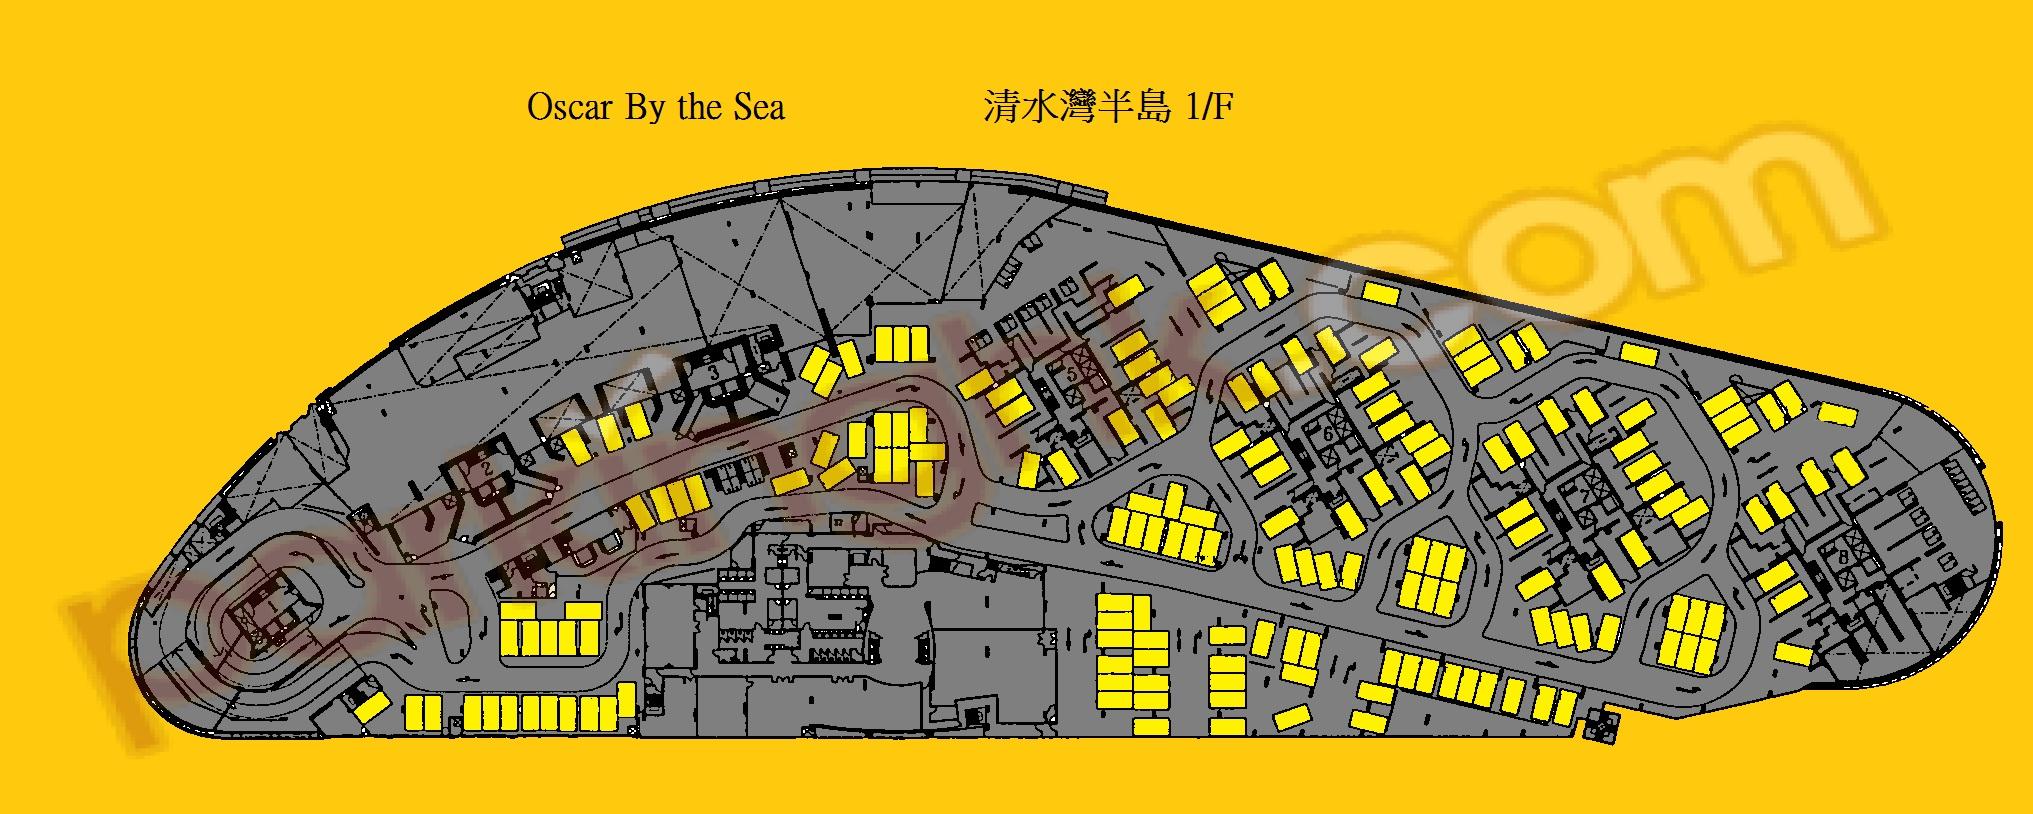  Tseung Kwan O Carpark  Pung Loi Road  Oscar By The Sea  Floor plan 香港車位.com ParkingHK.com